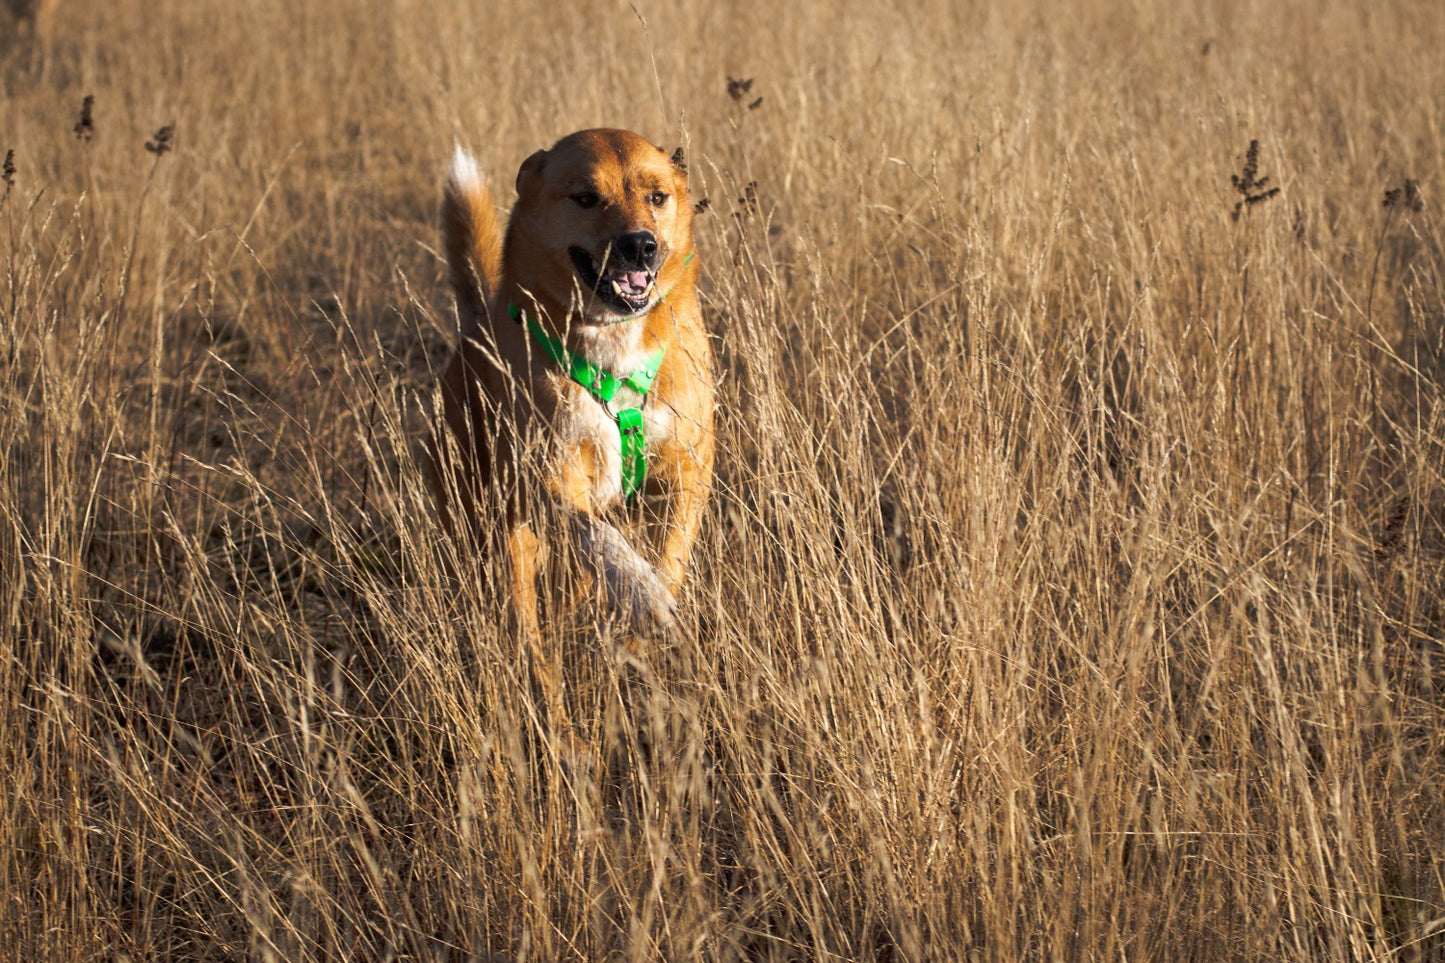 Backwoods Dog Fynn wearing y-front harness running is grassy field